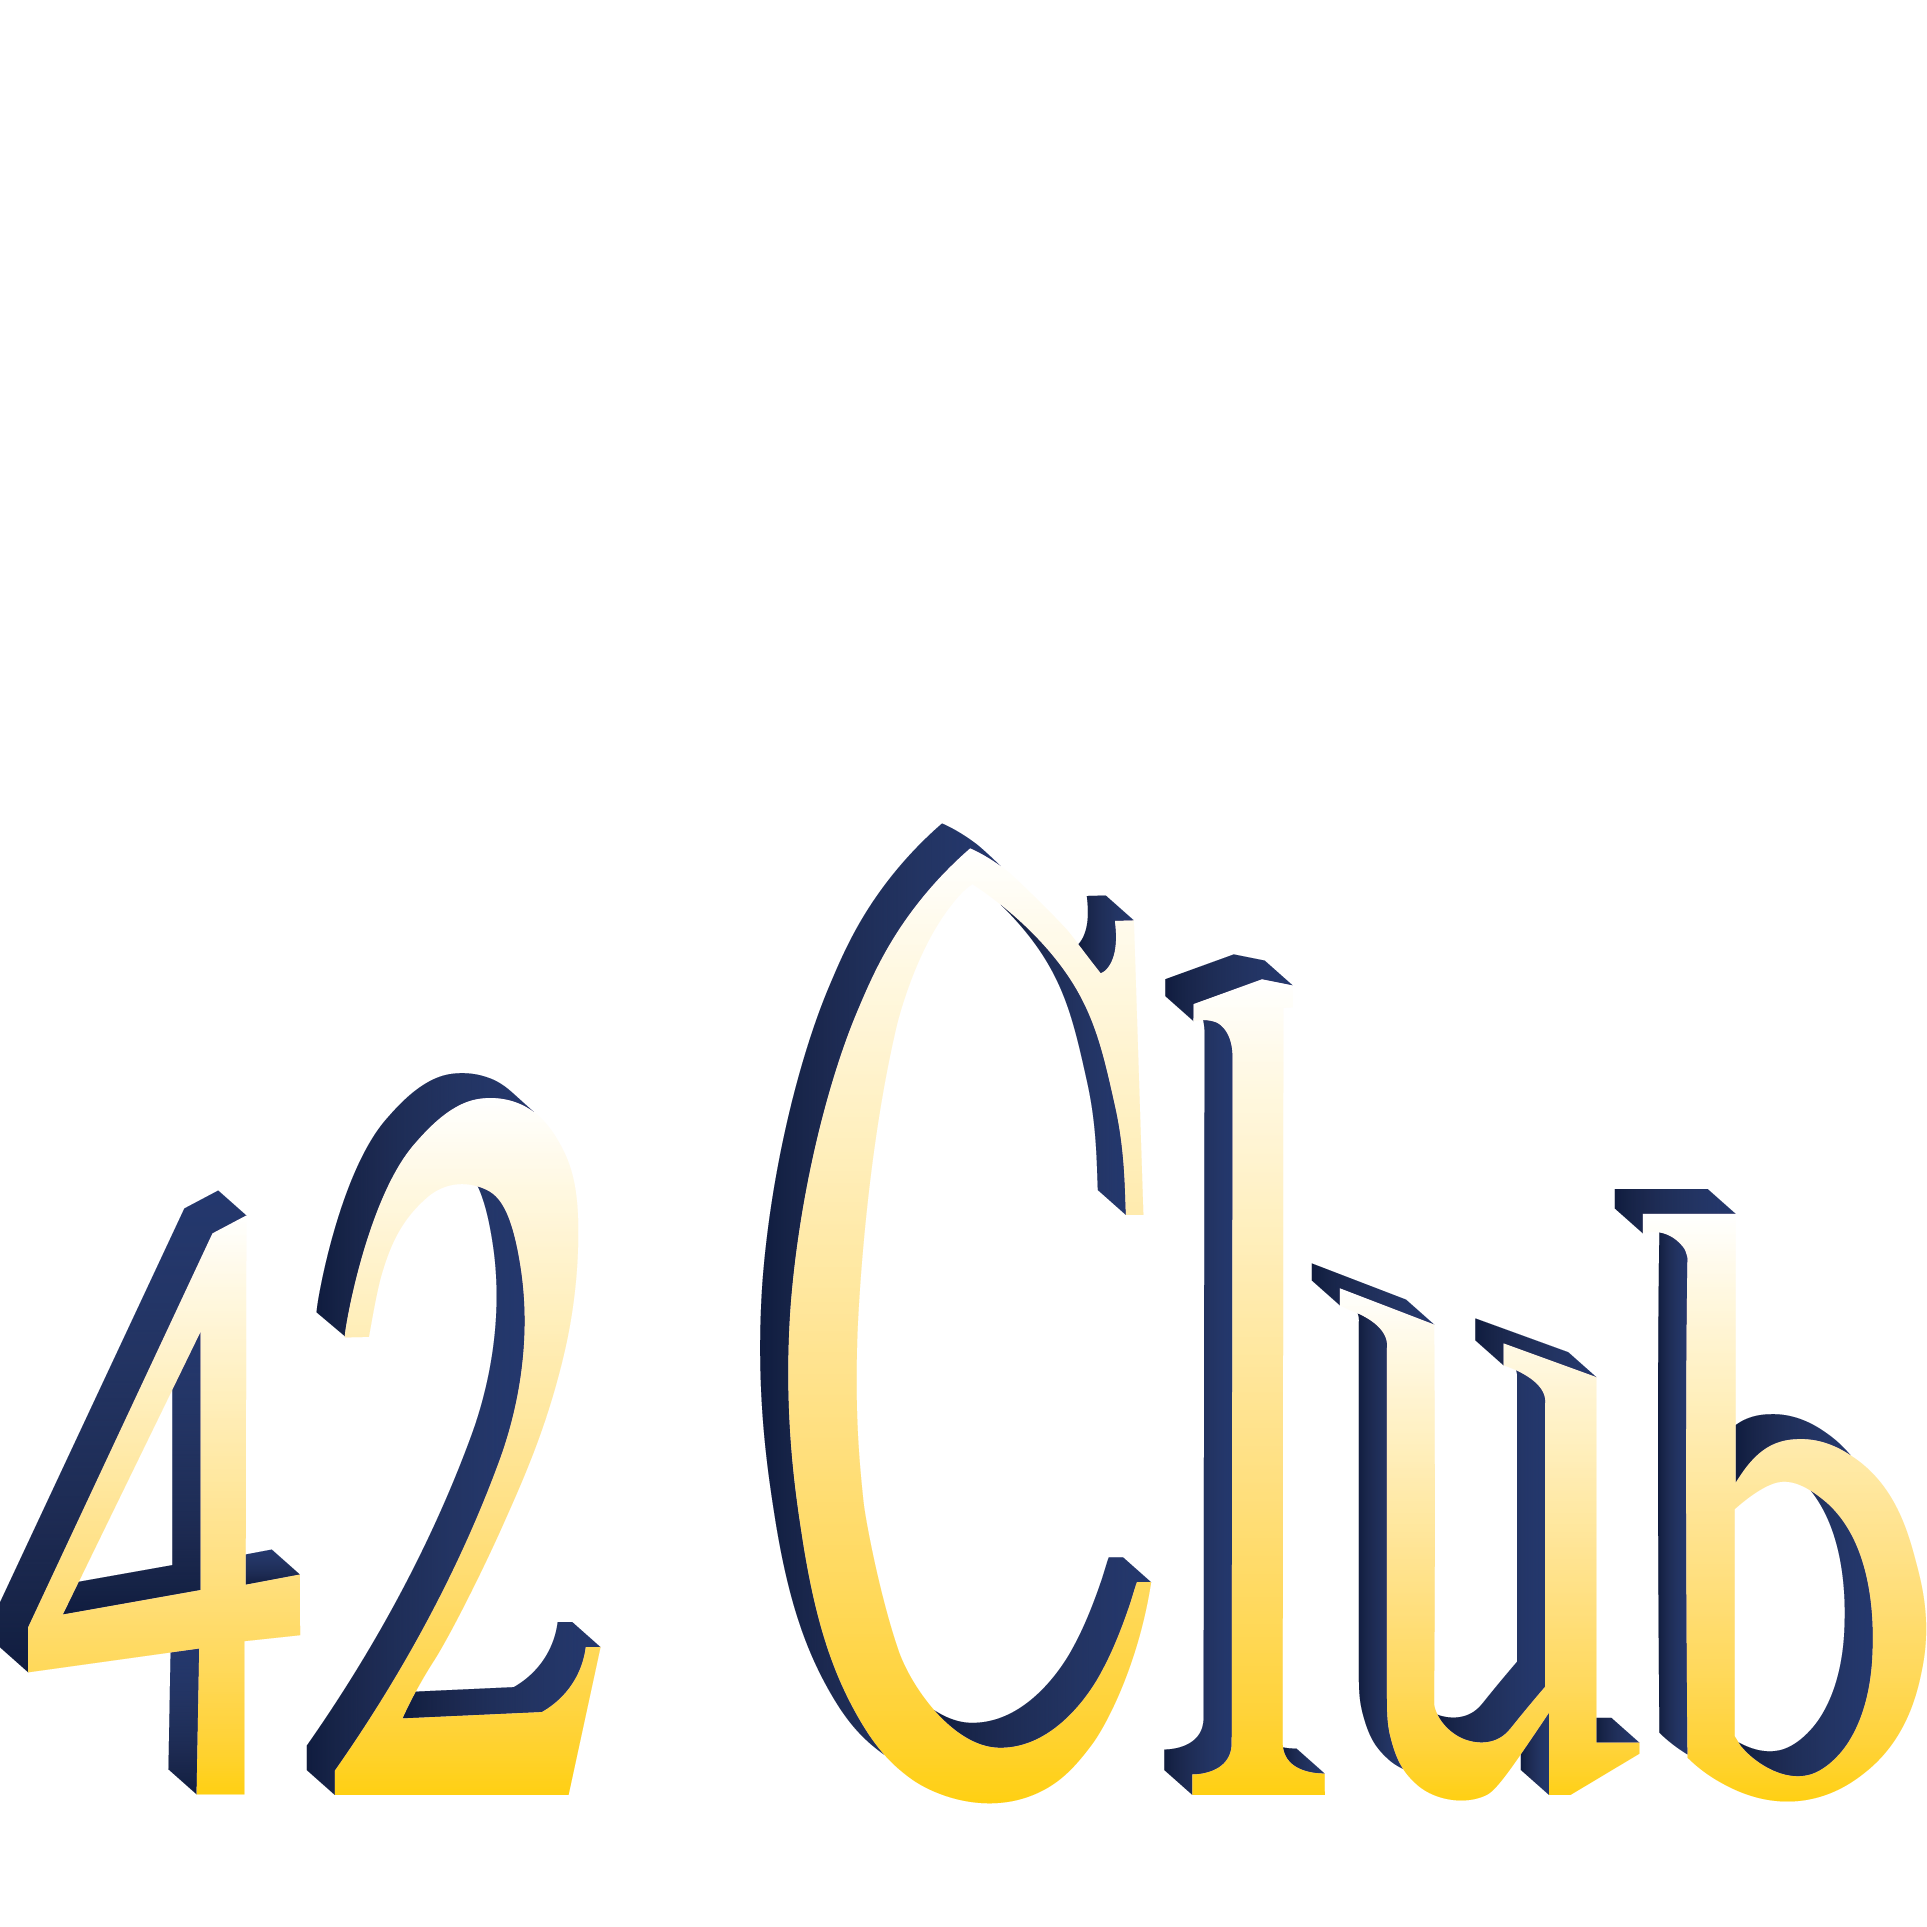 The 42 Club